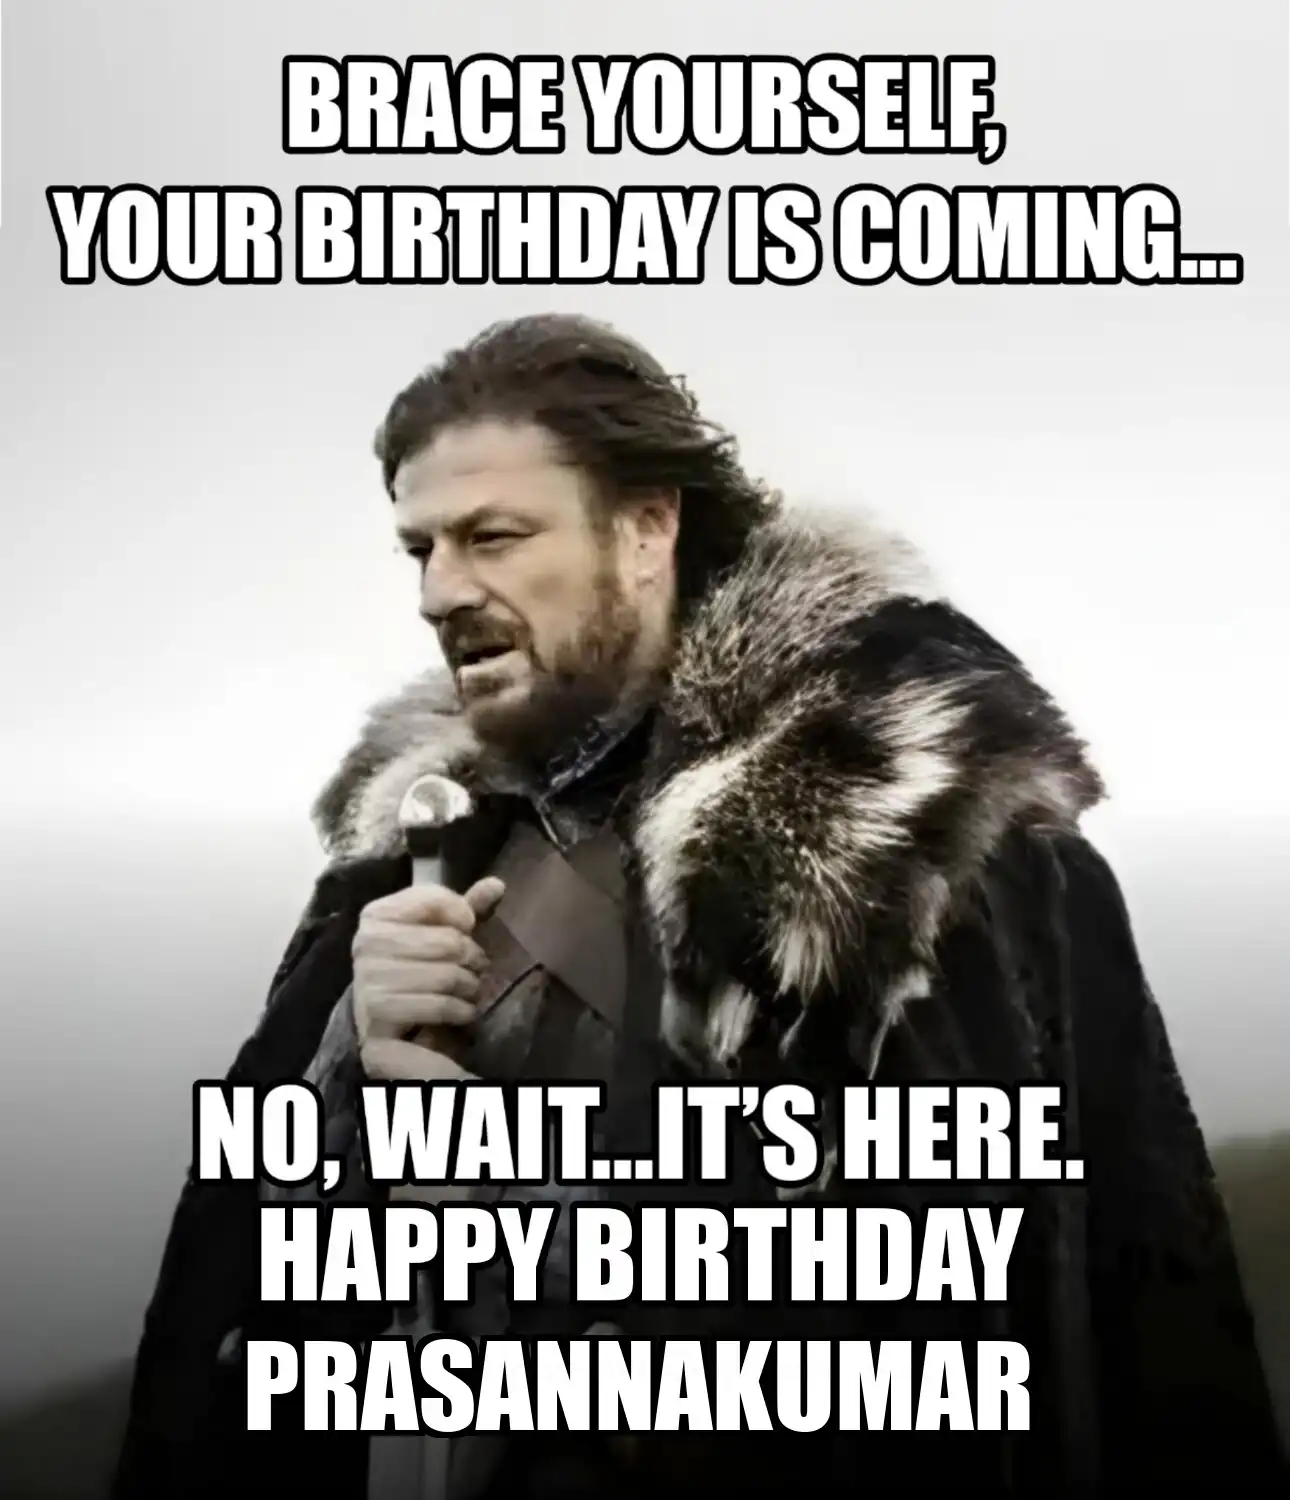 Happy Birthday Prasannakumar Brace Yourself Your Birthday Is Coming Meme